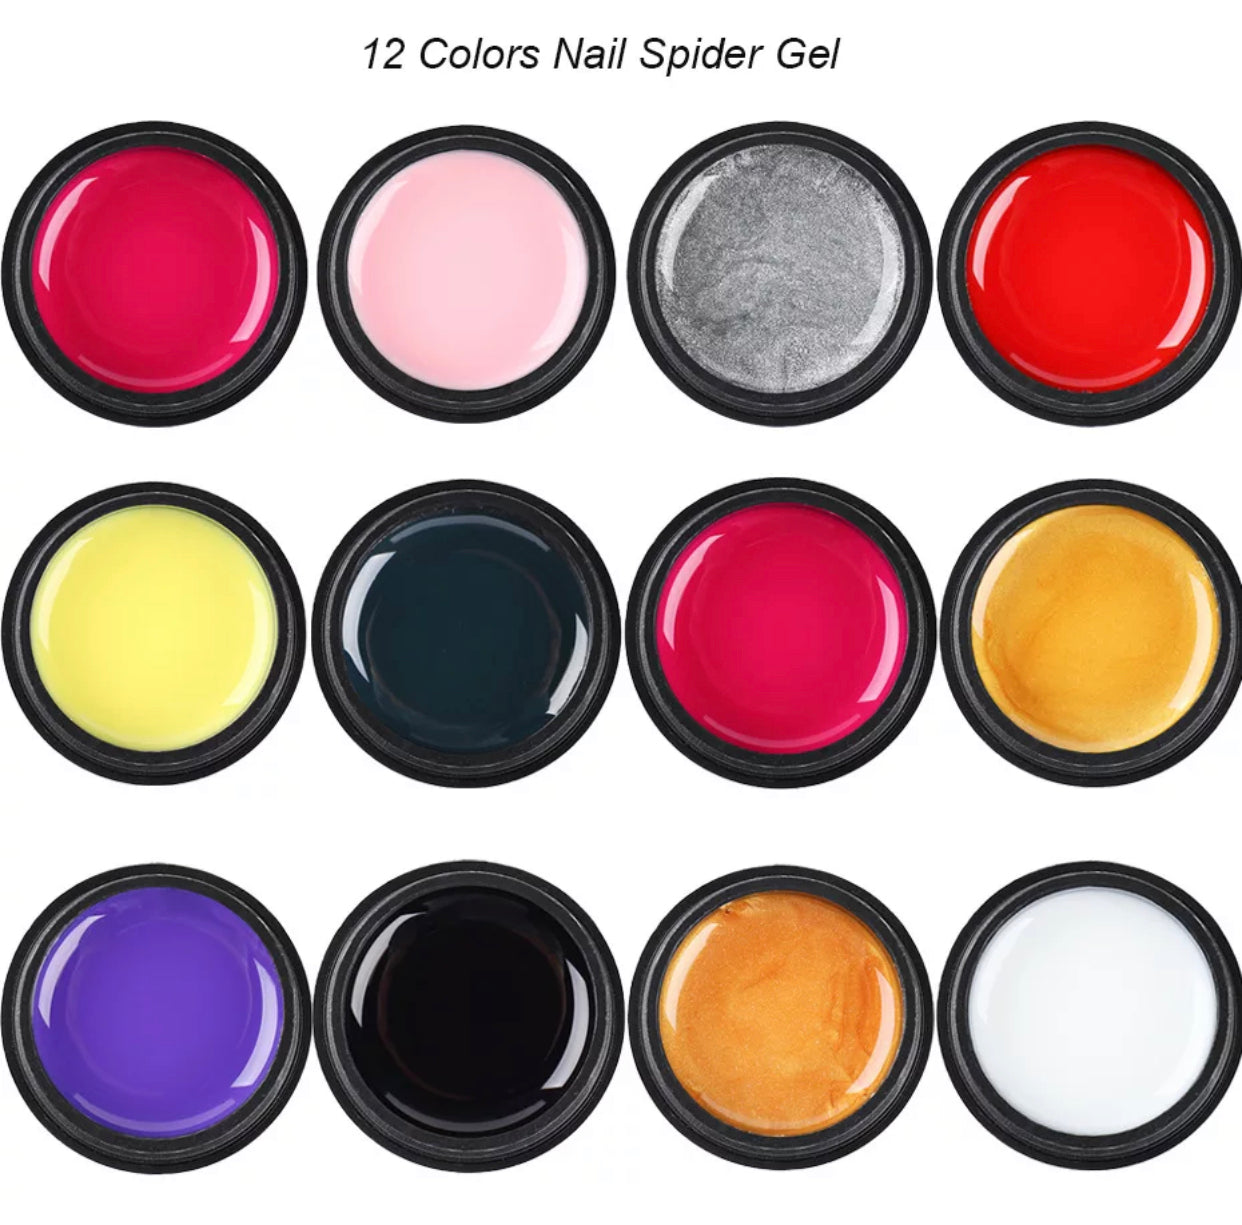 Spider Gel 12 Colors/Set - Premier Nail Supply 